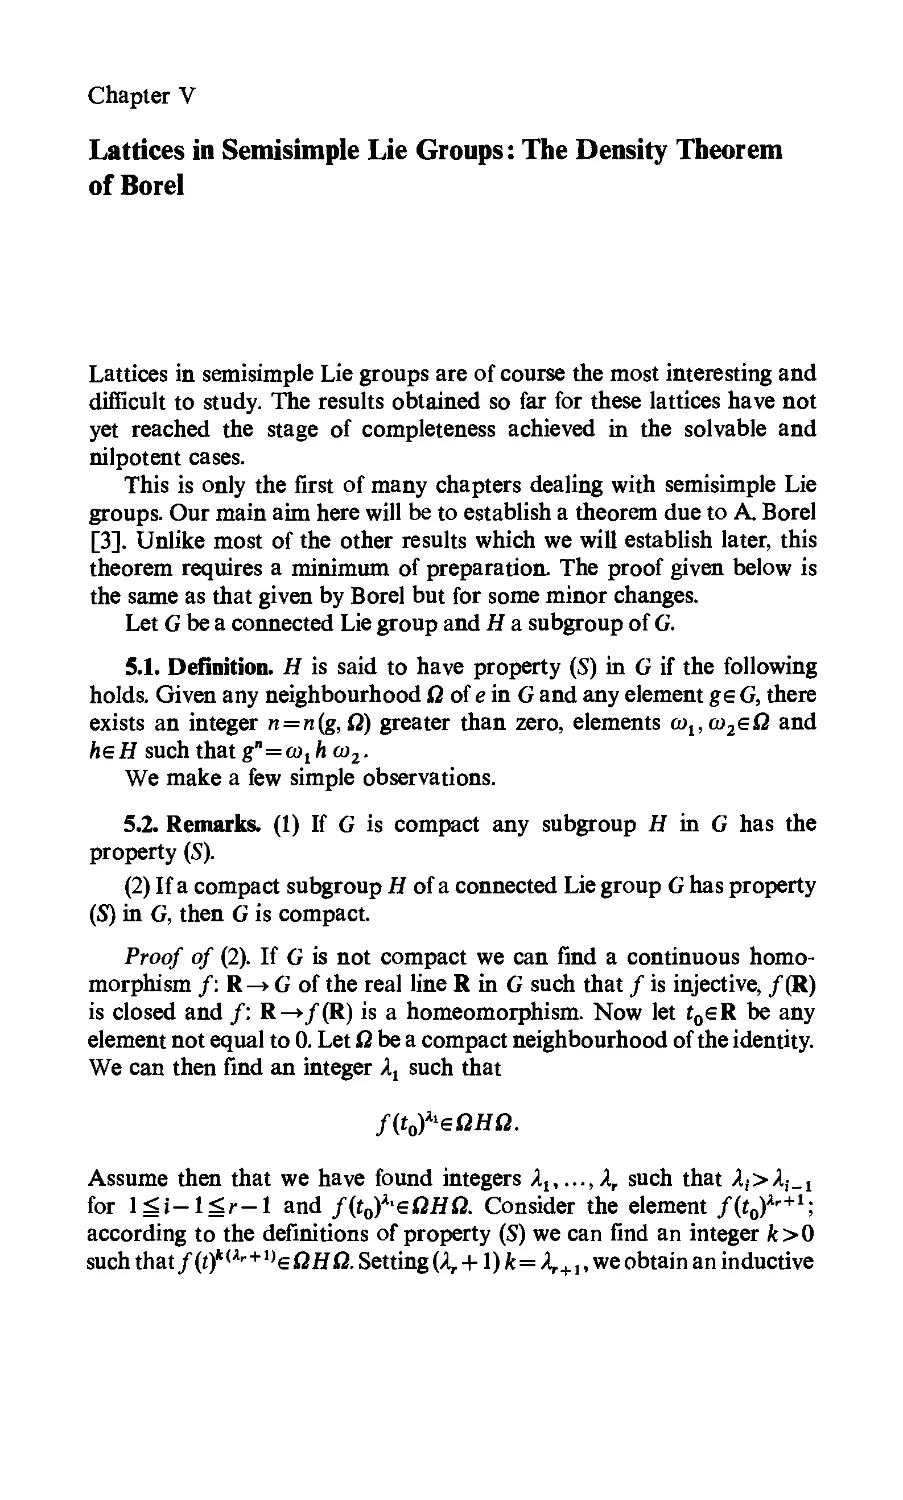 V. Lattices in Semisimple Lie Groups: The Density Theorem of Borel